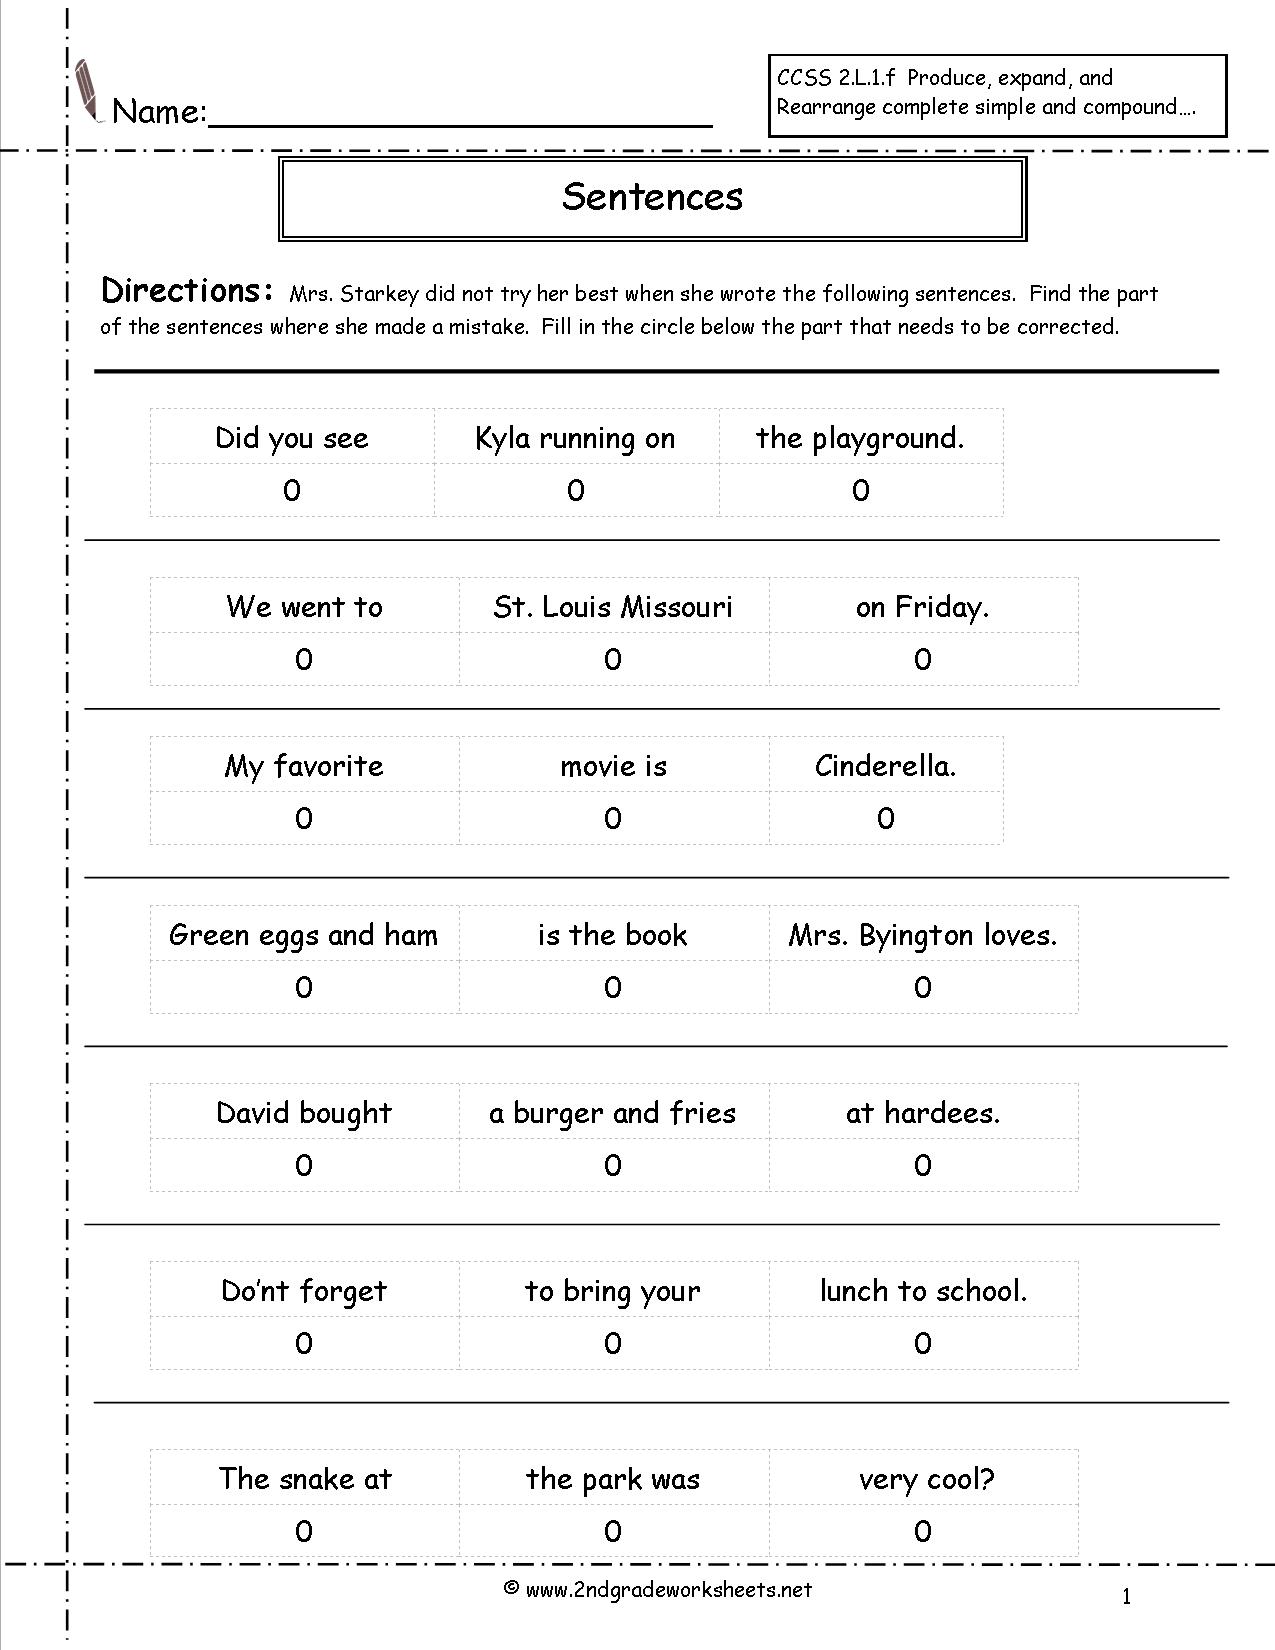 sentences-worksheets-from-the-teacher-s-guide